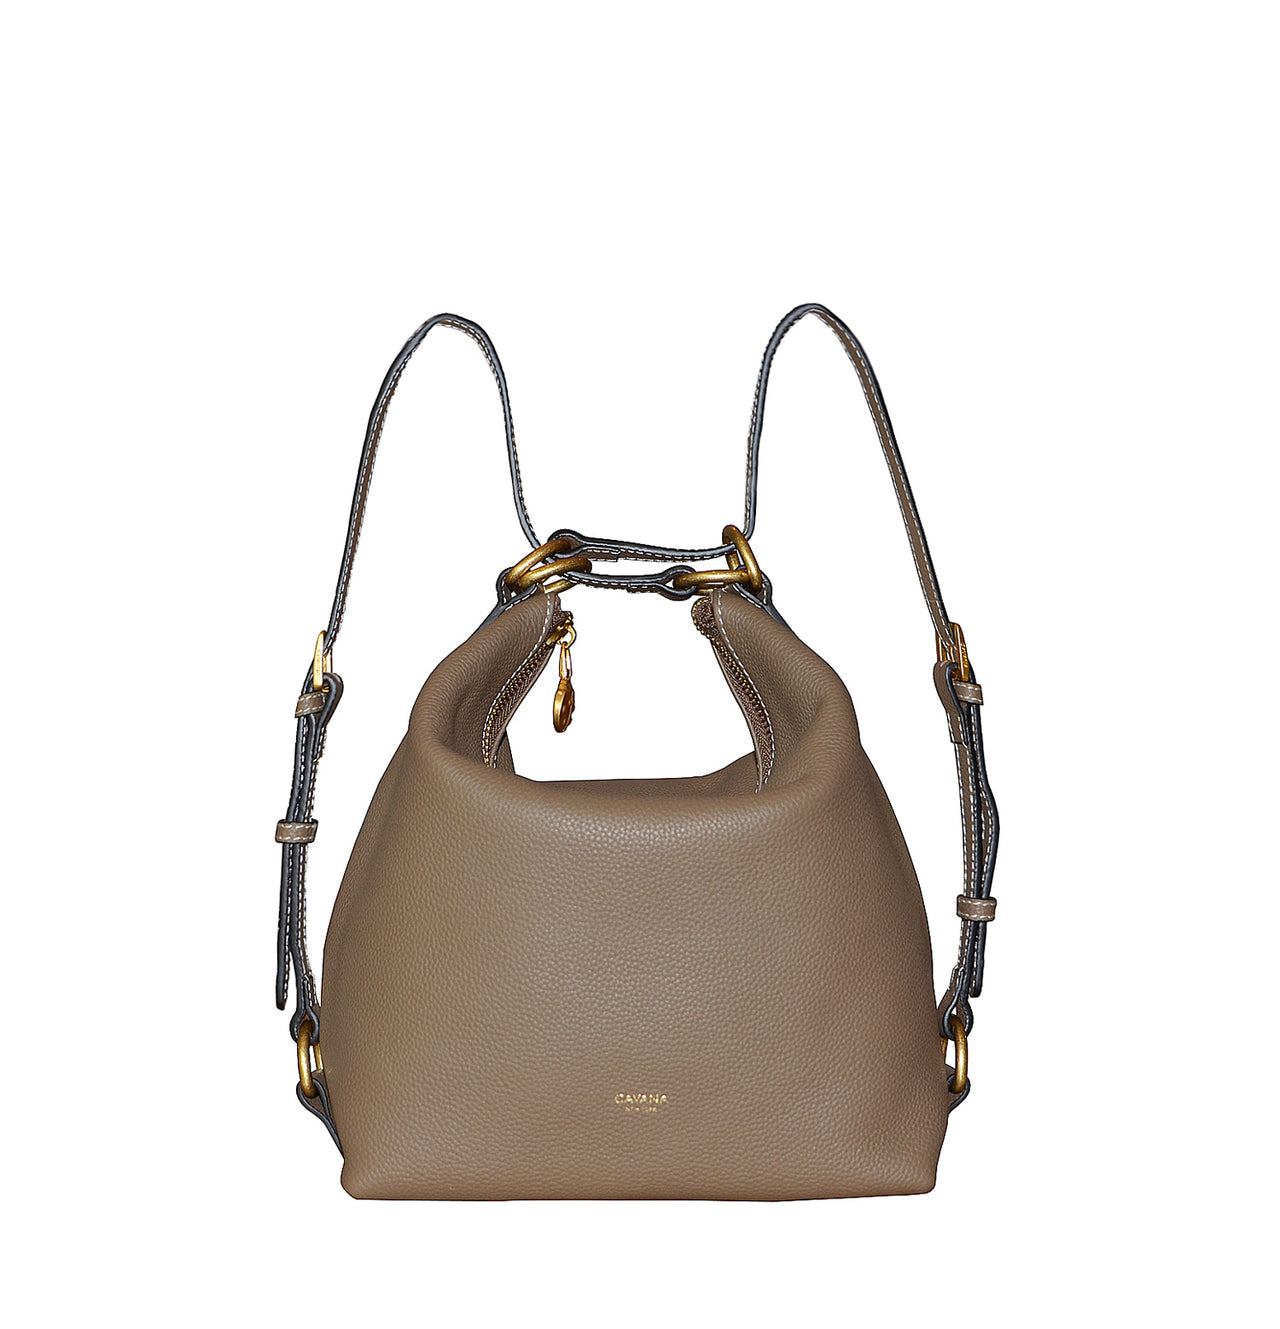 Calvin Klein Pebble Leather Hobo Tan/Brown Bag